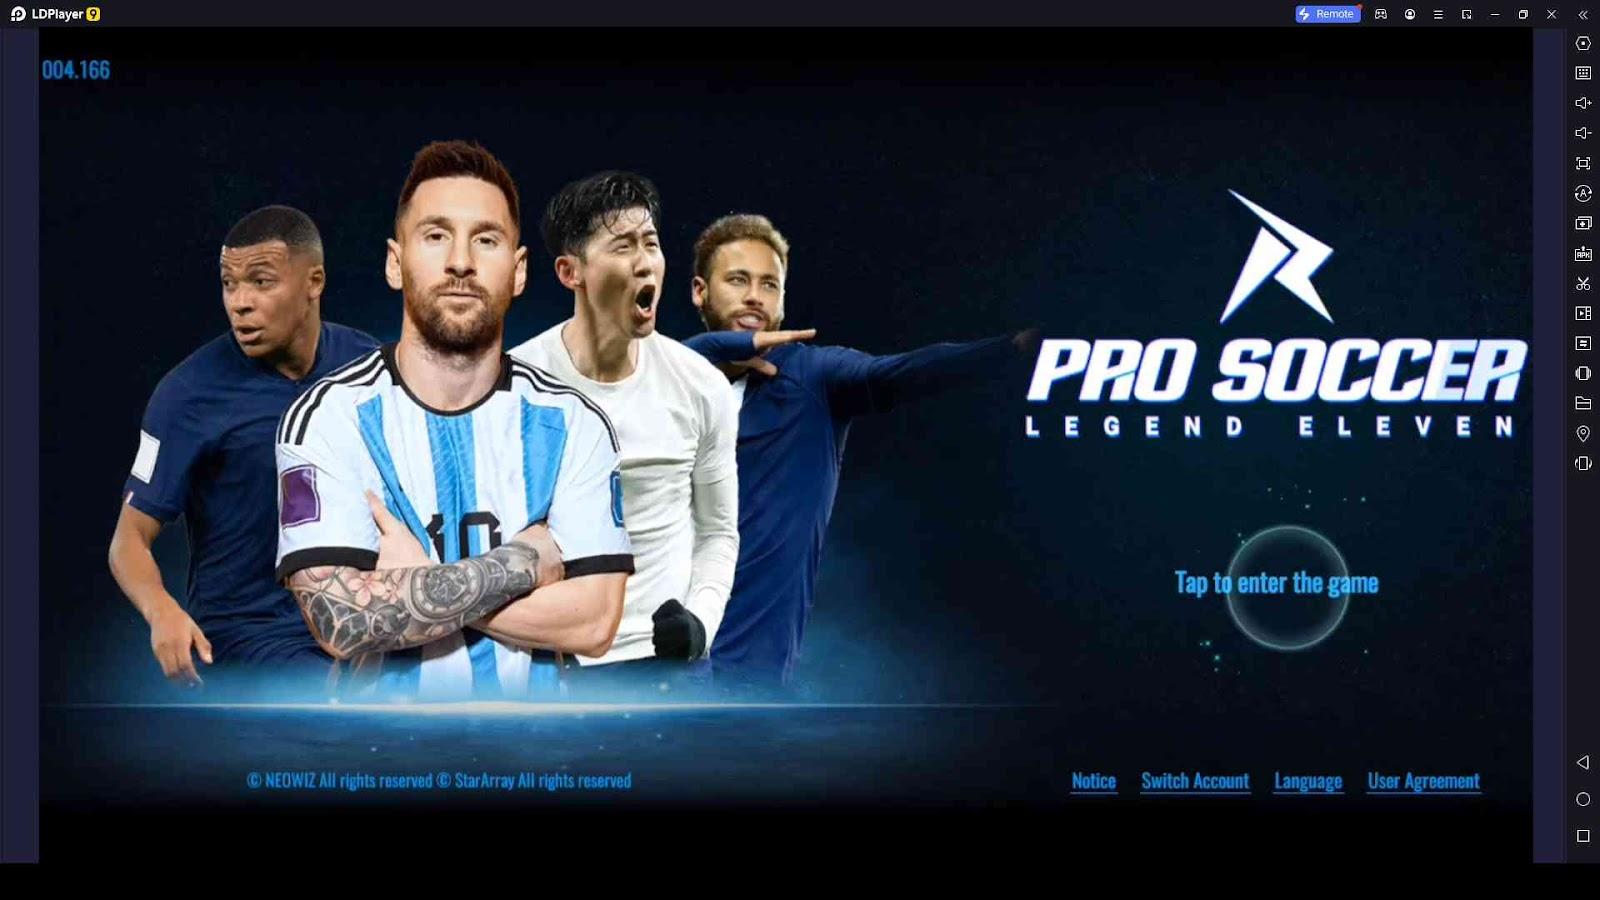 Pro Soccer: Legend Eleven Codes